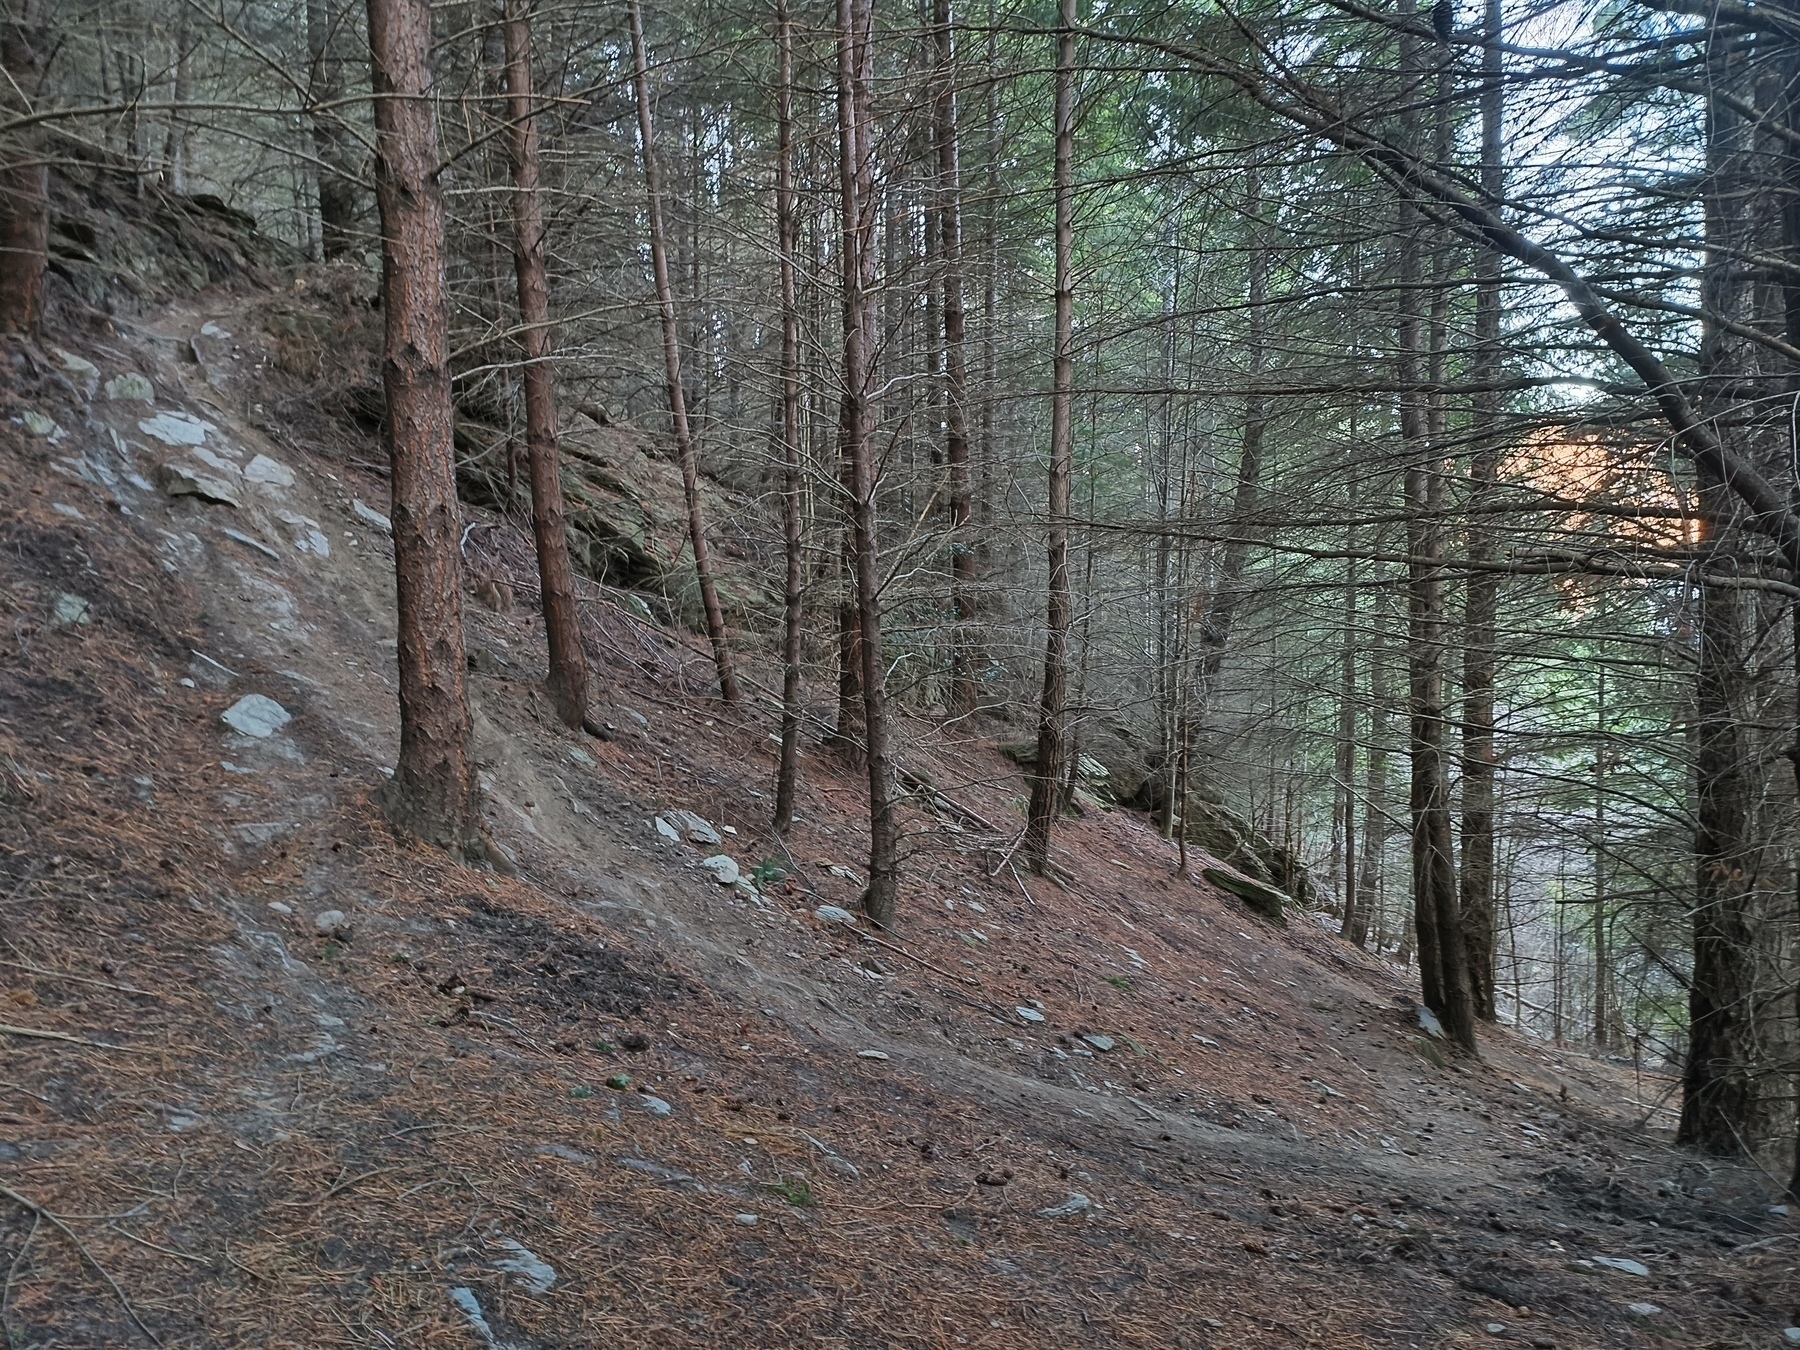 Downhill mountain bike trail through a pine forest.